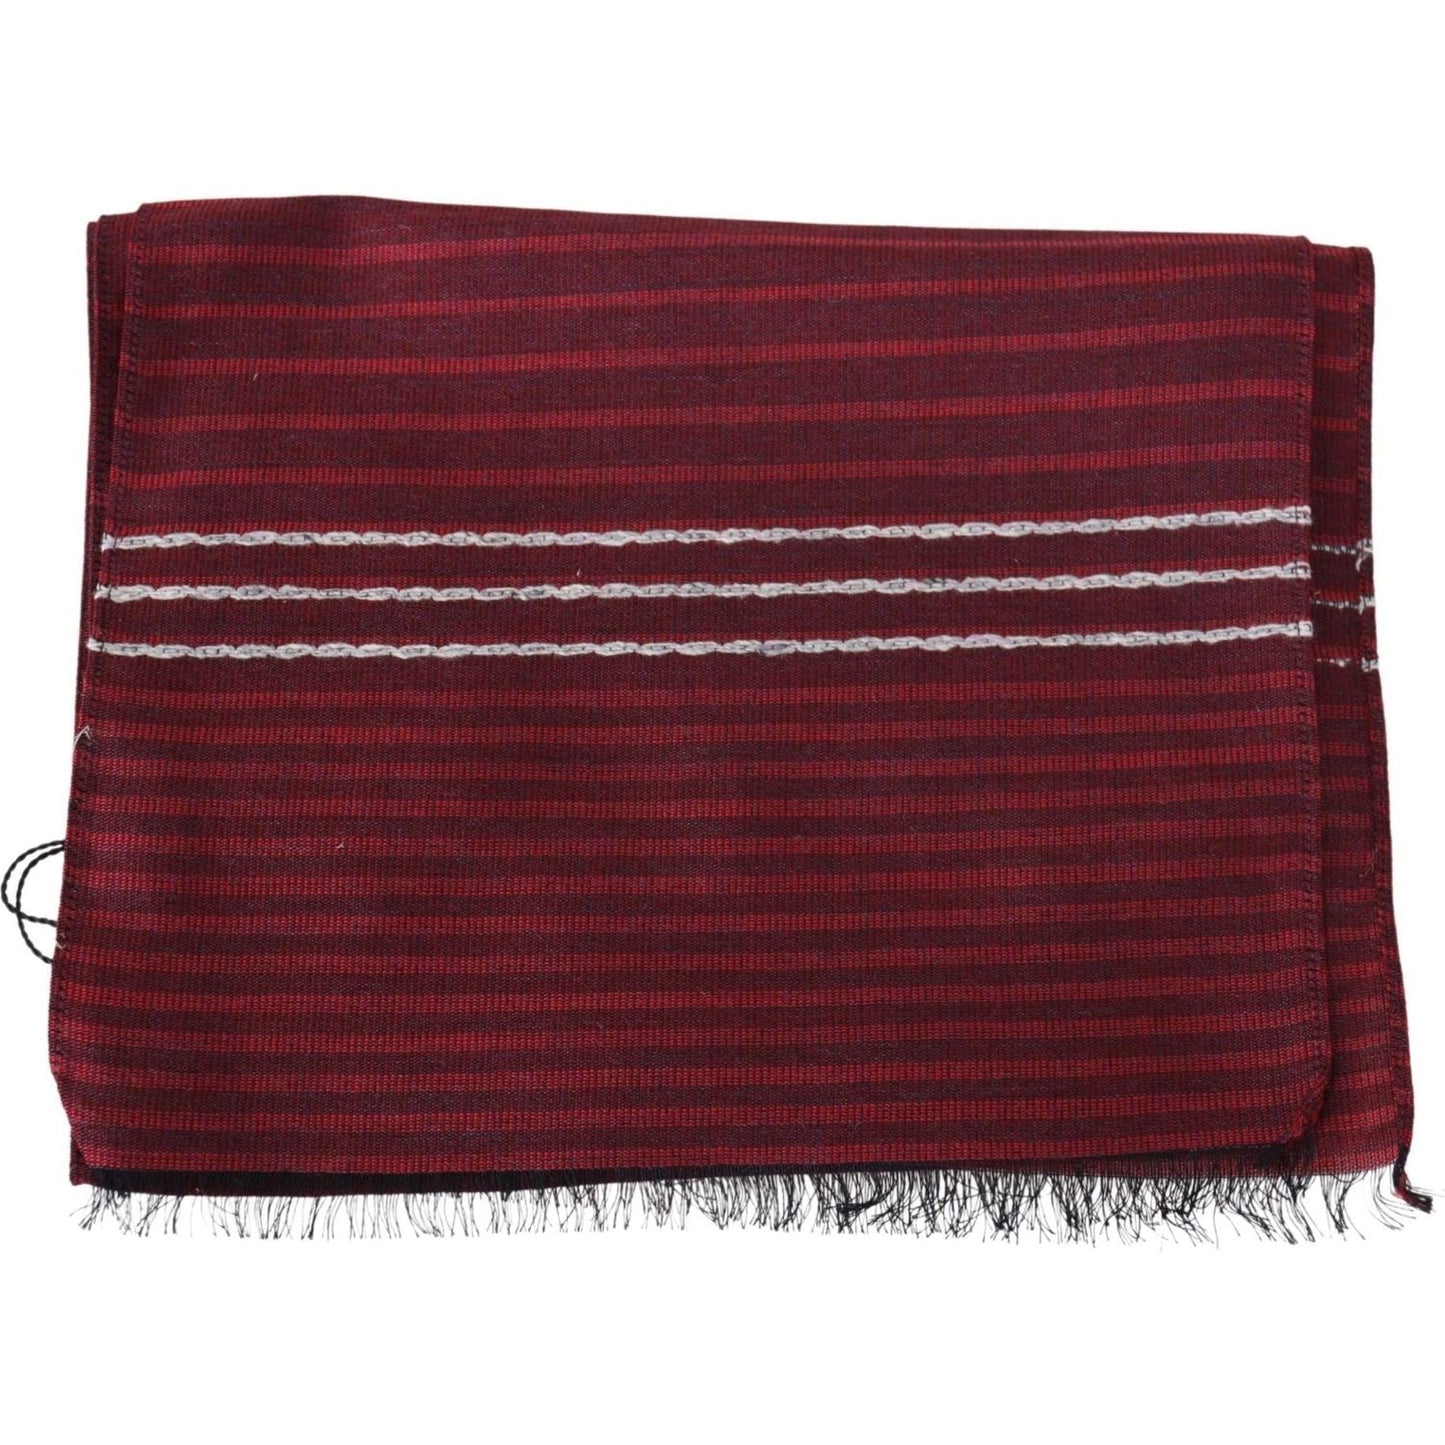 Missoni Chic Wool Silk Blend Striped Scarf red-wool-striped-unisex-neck-wrap-shawl-fringes-scarf